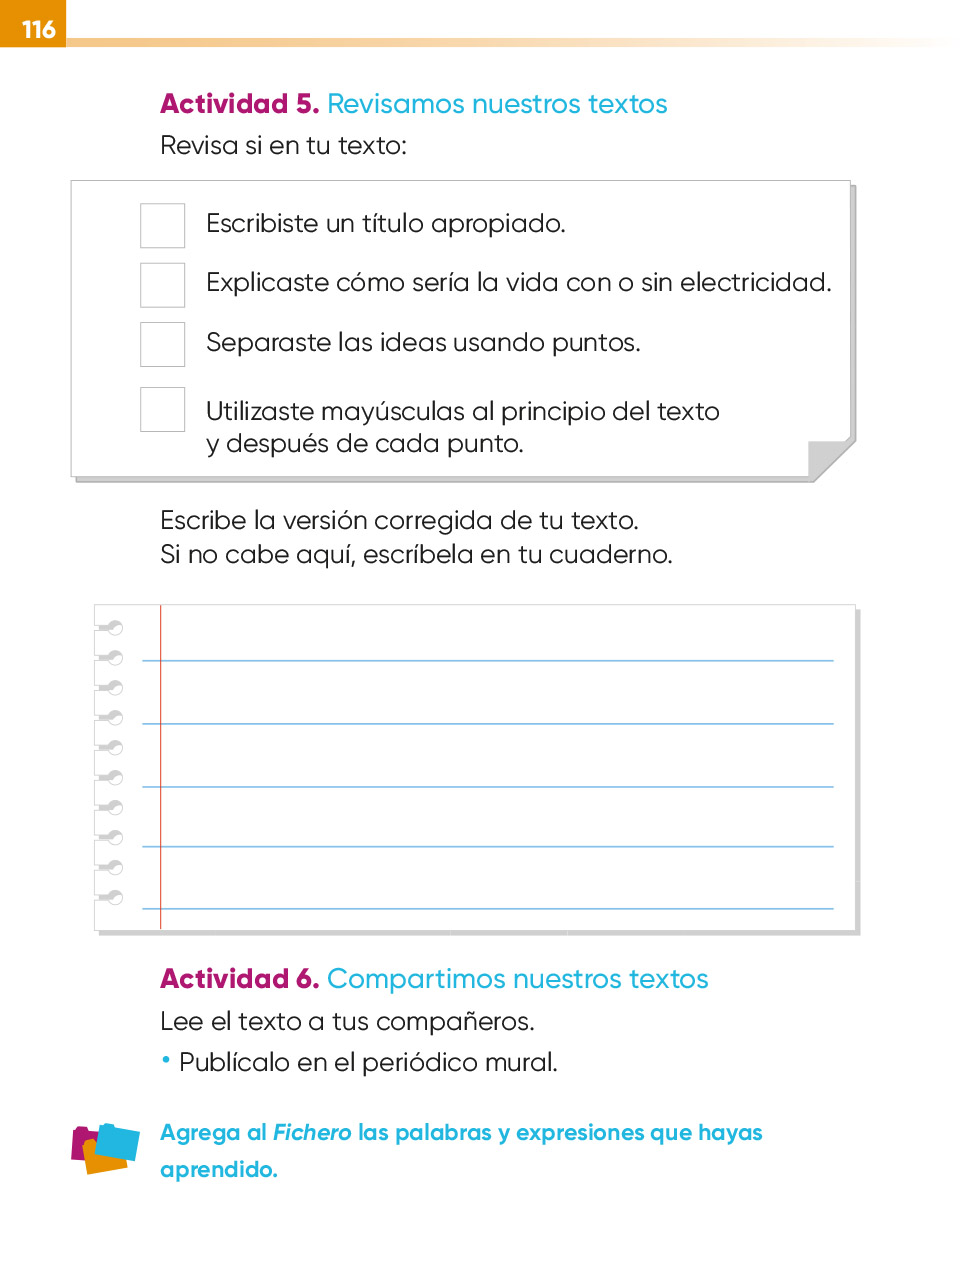 Lengua Materna Español Segundo Grado 2020 2021 Página 116 De 225 Libros De Texto Online 0888